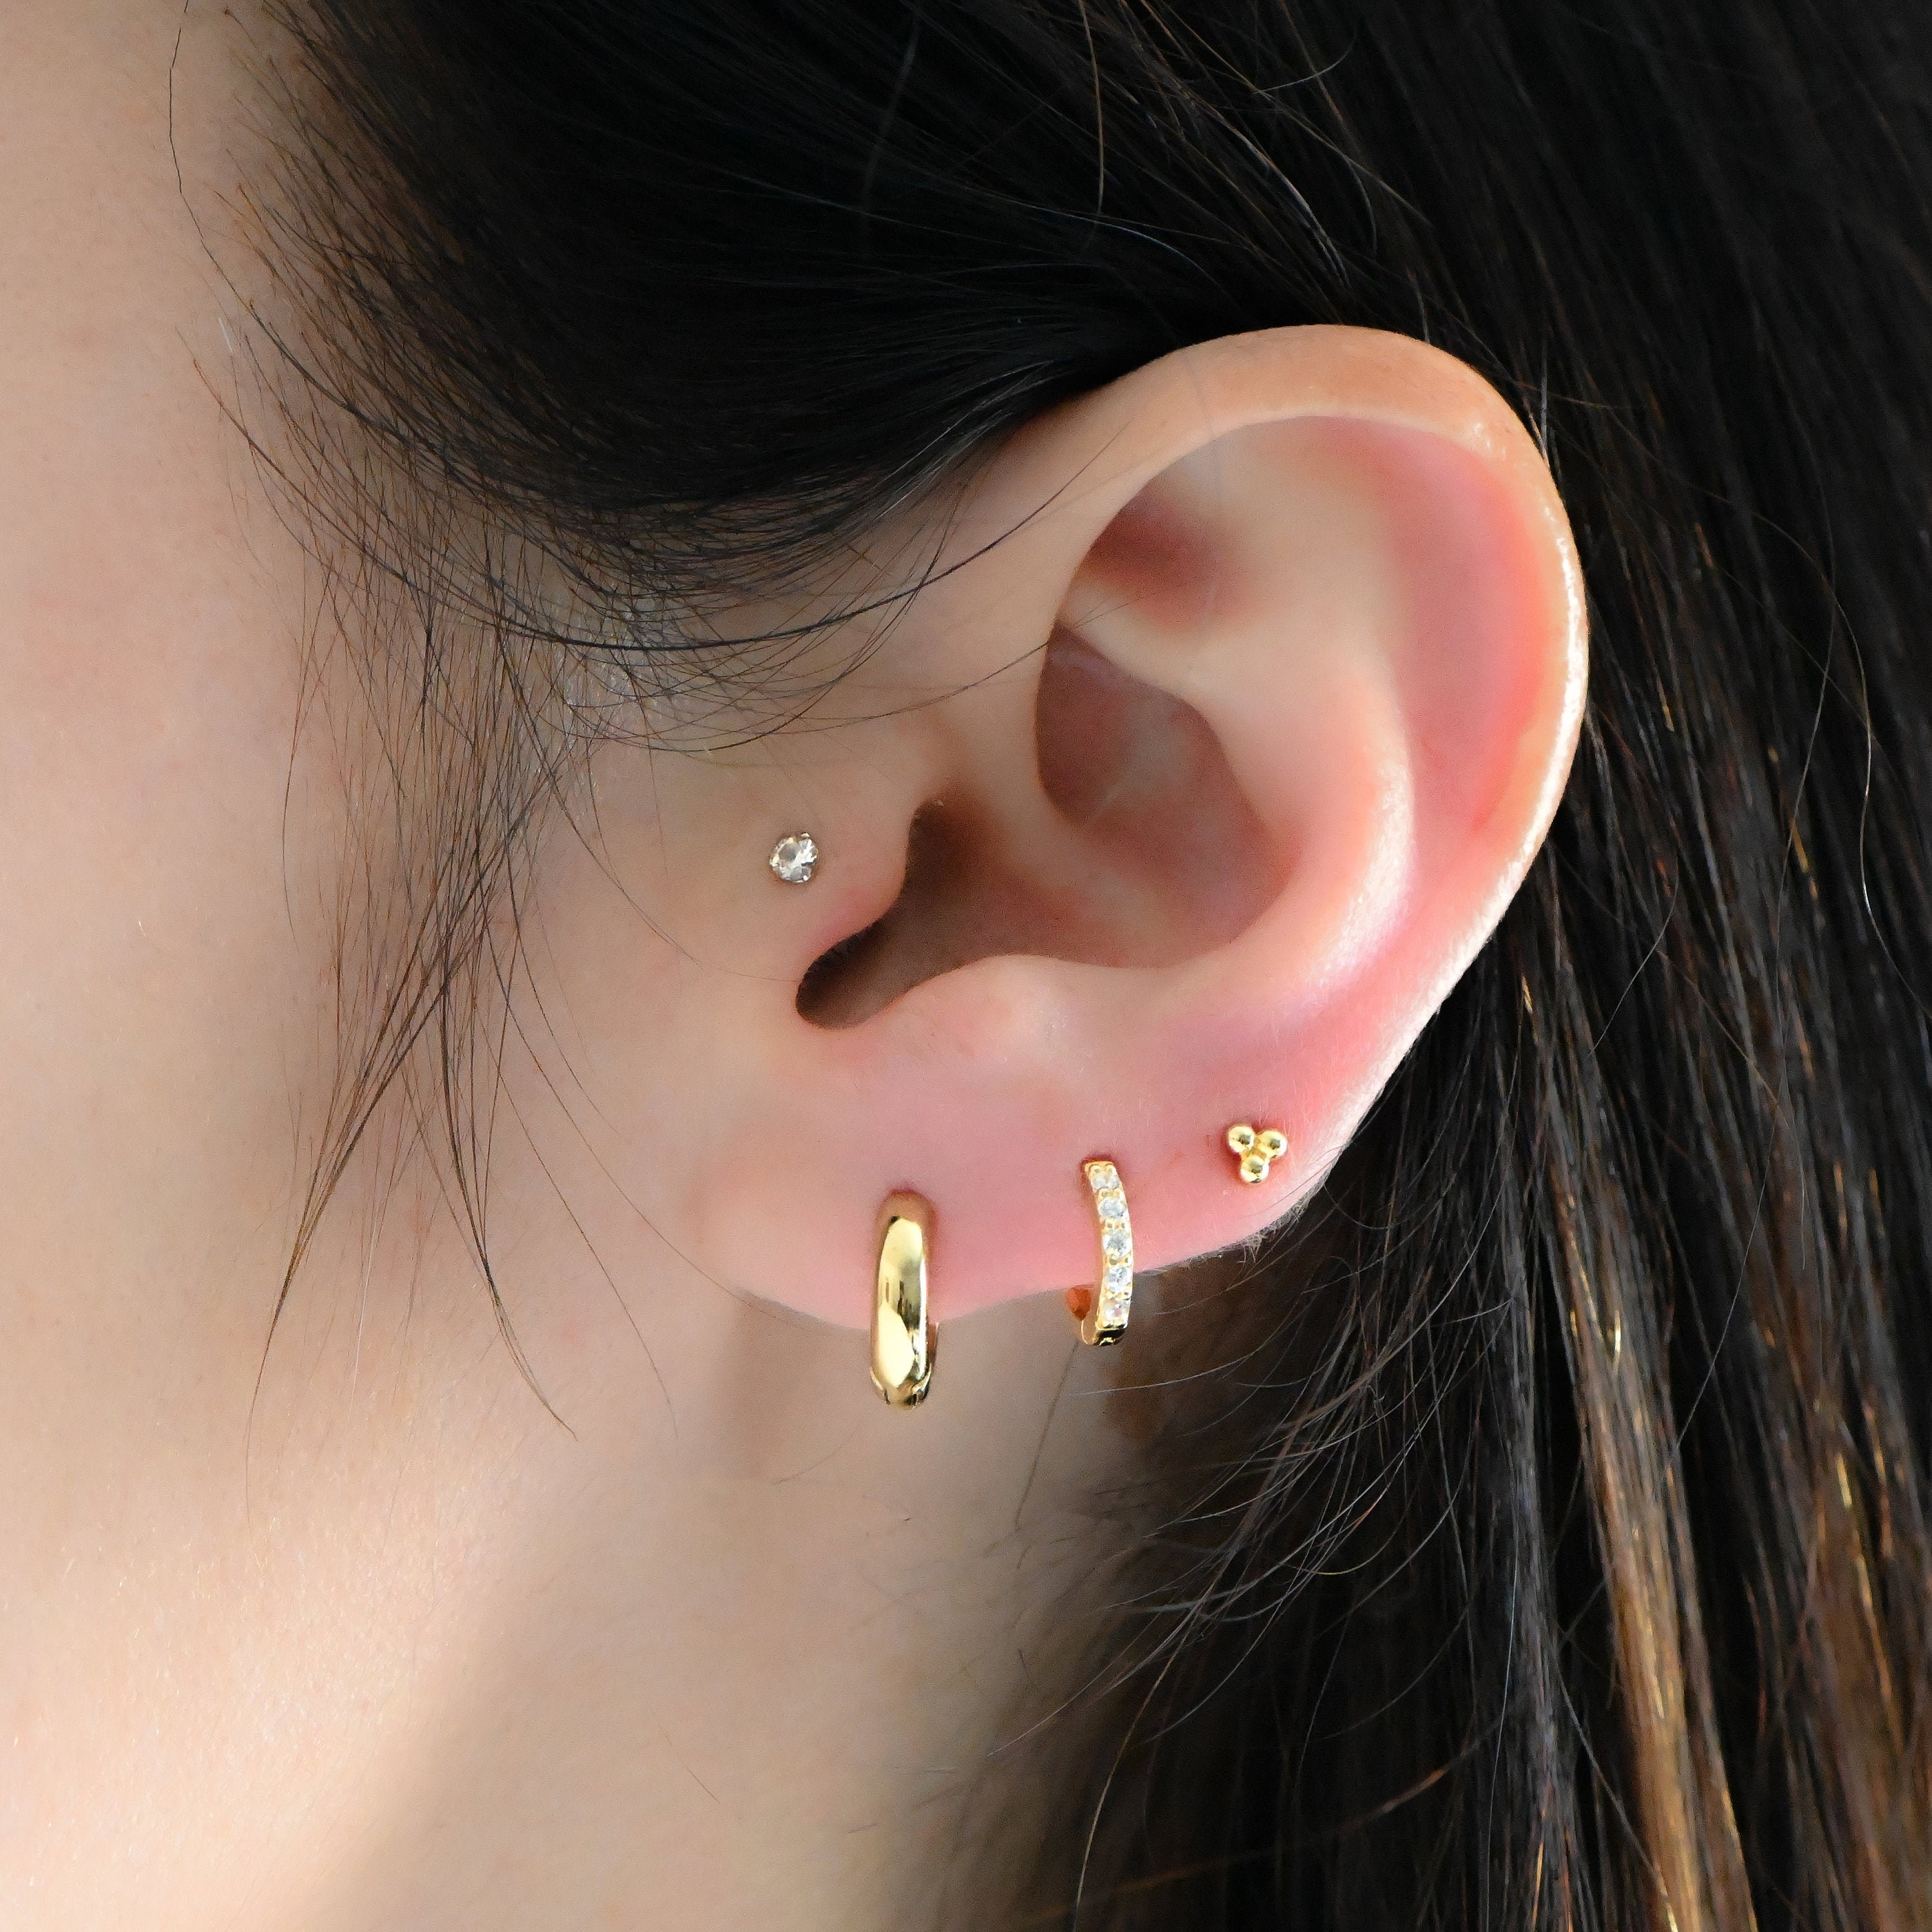 Buy quality Splendent gold basket hoop earrings in Pune